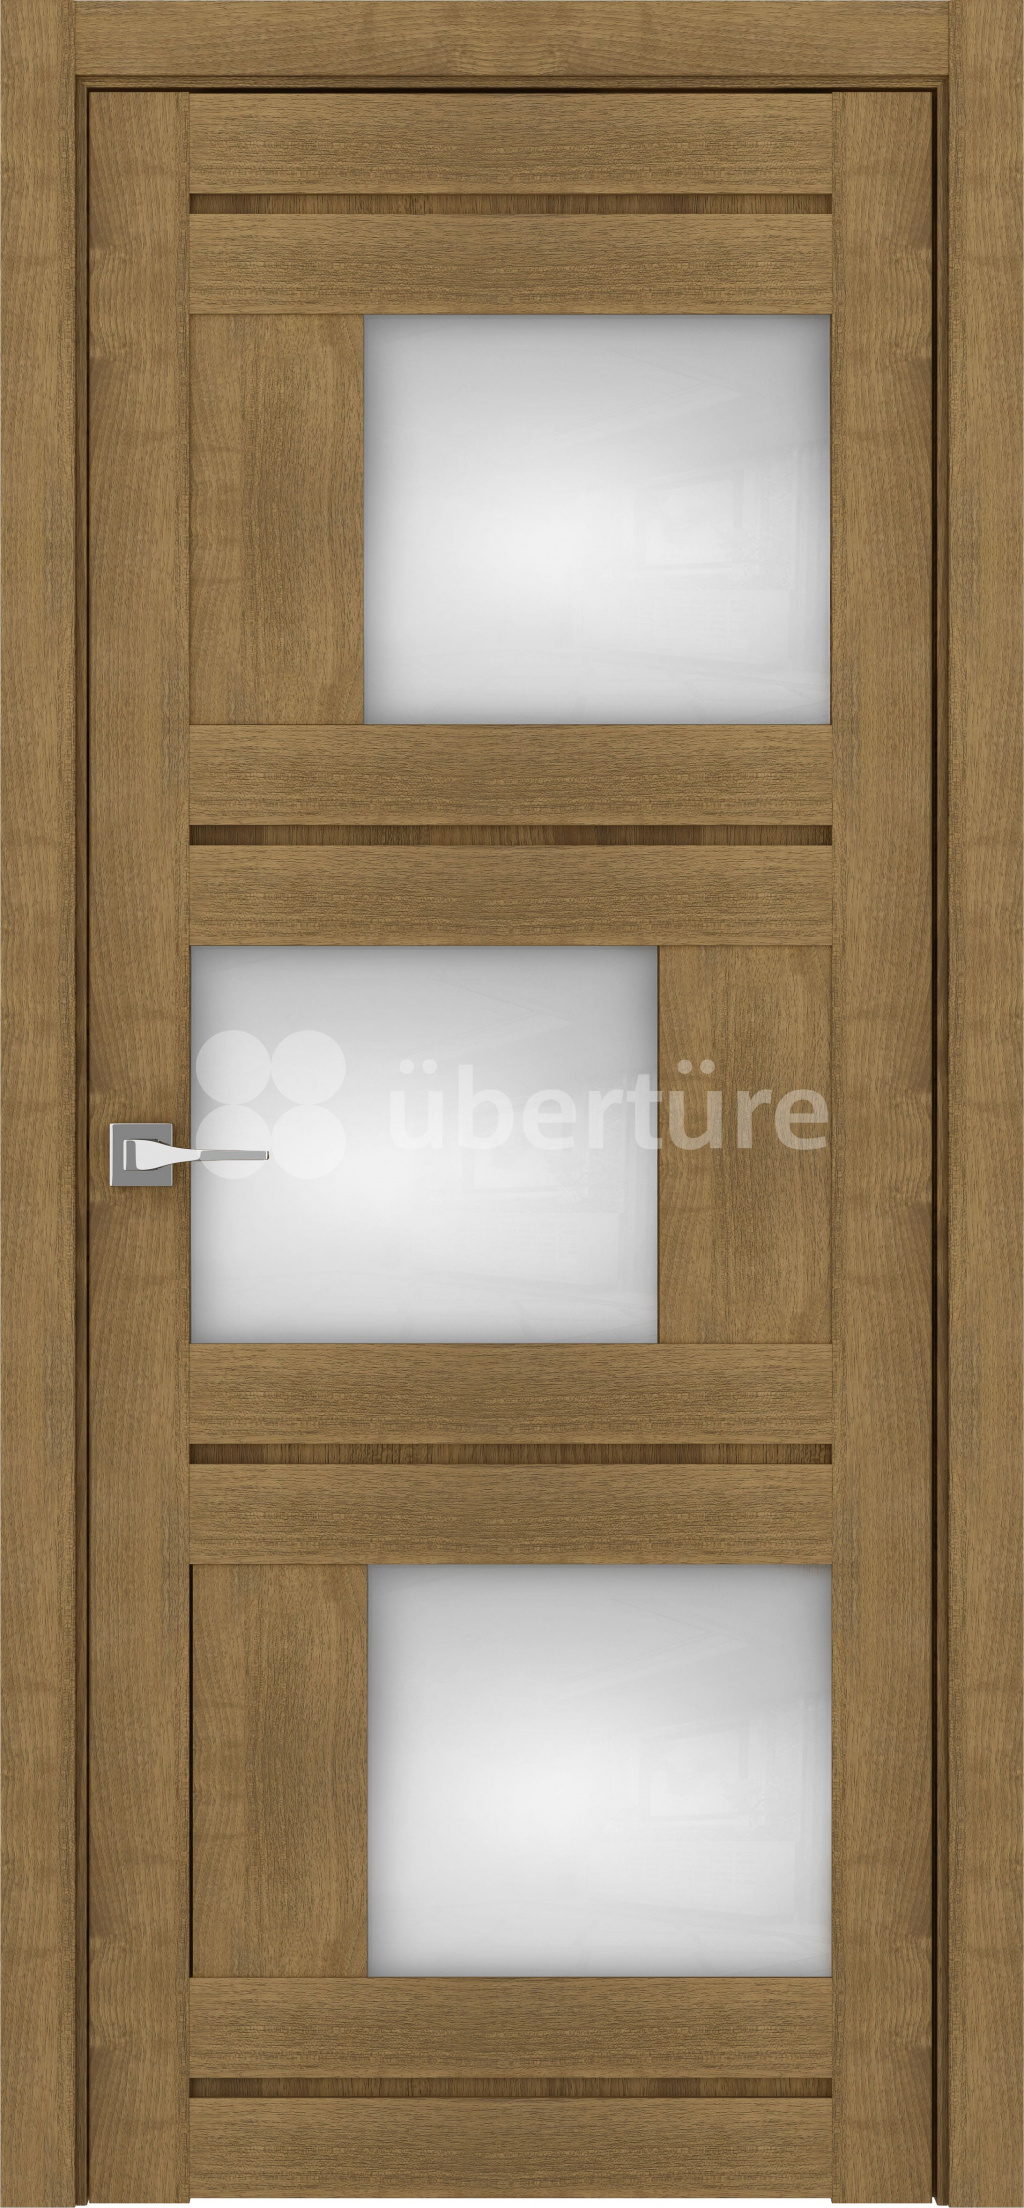 Uberture Межкомнатная дверь Light ПДО 2181, арт. 17436 - фото №5